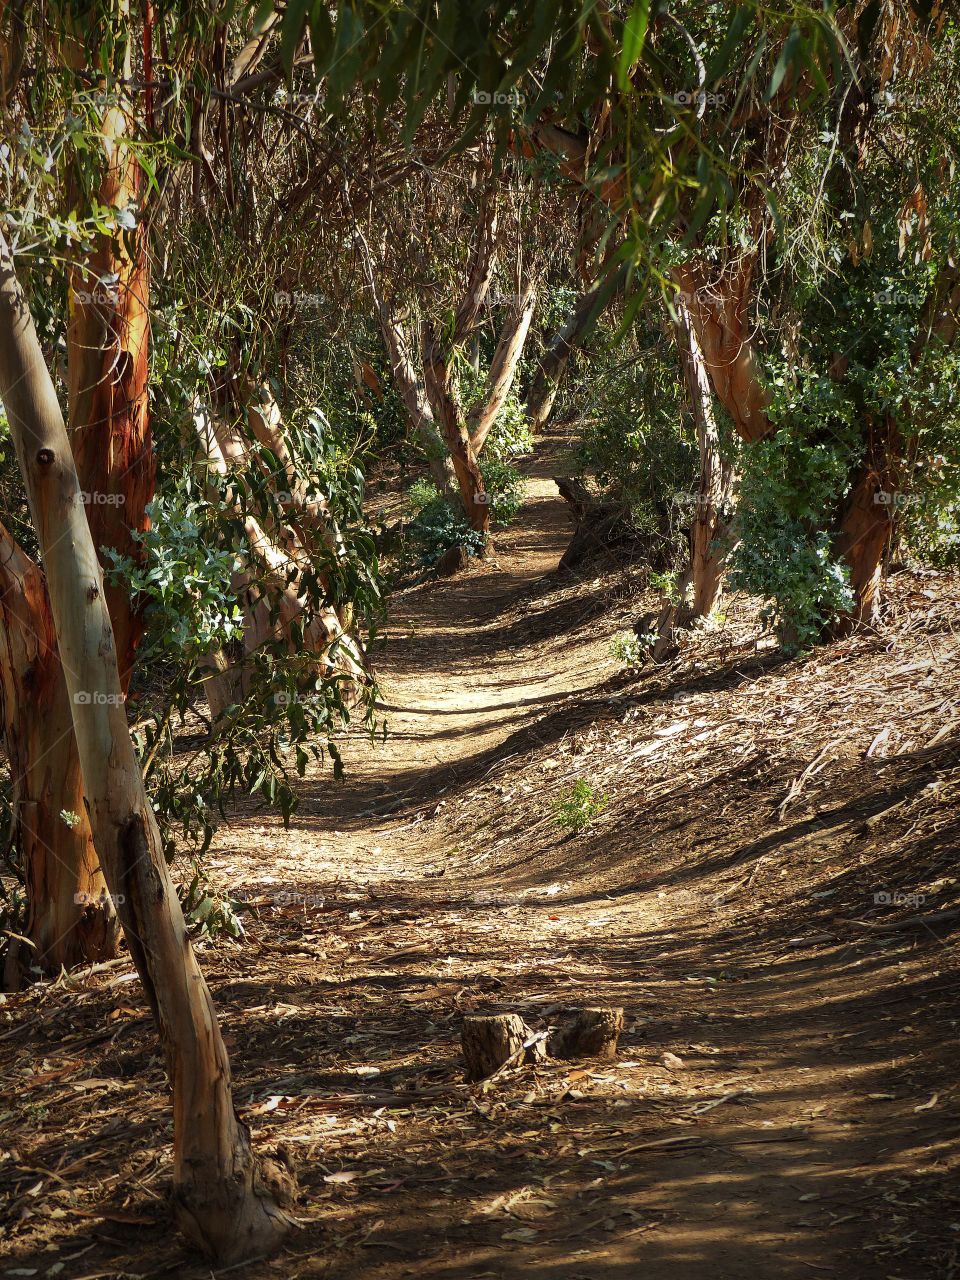 Hiking path through grove of trees 